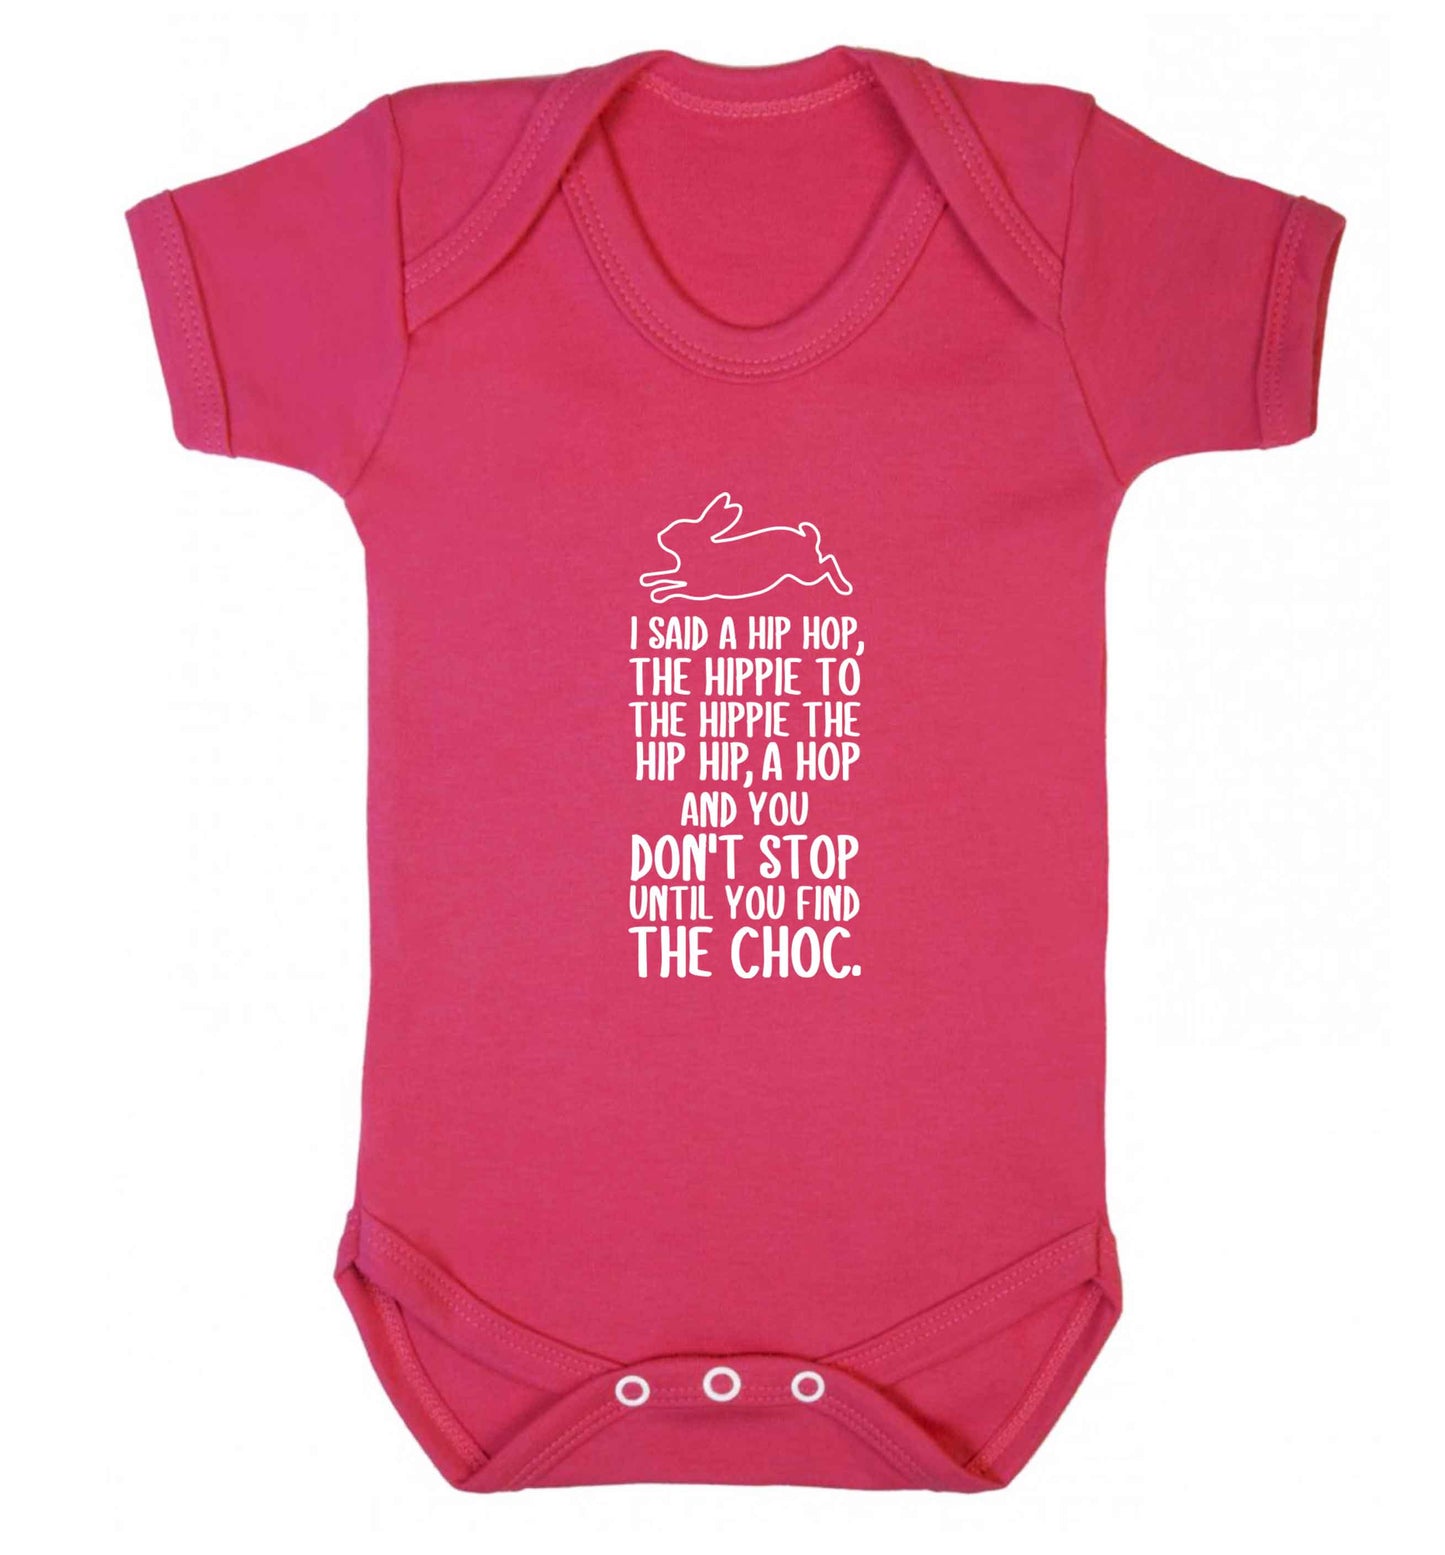 Don't stop until you find the choc baby vest dark pink 18-24 months